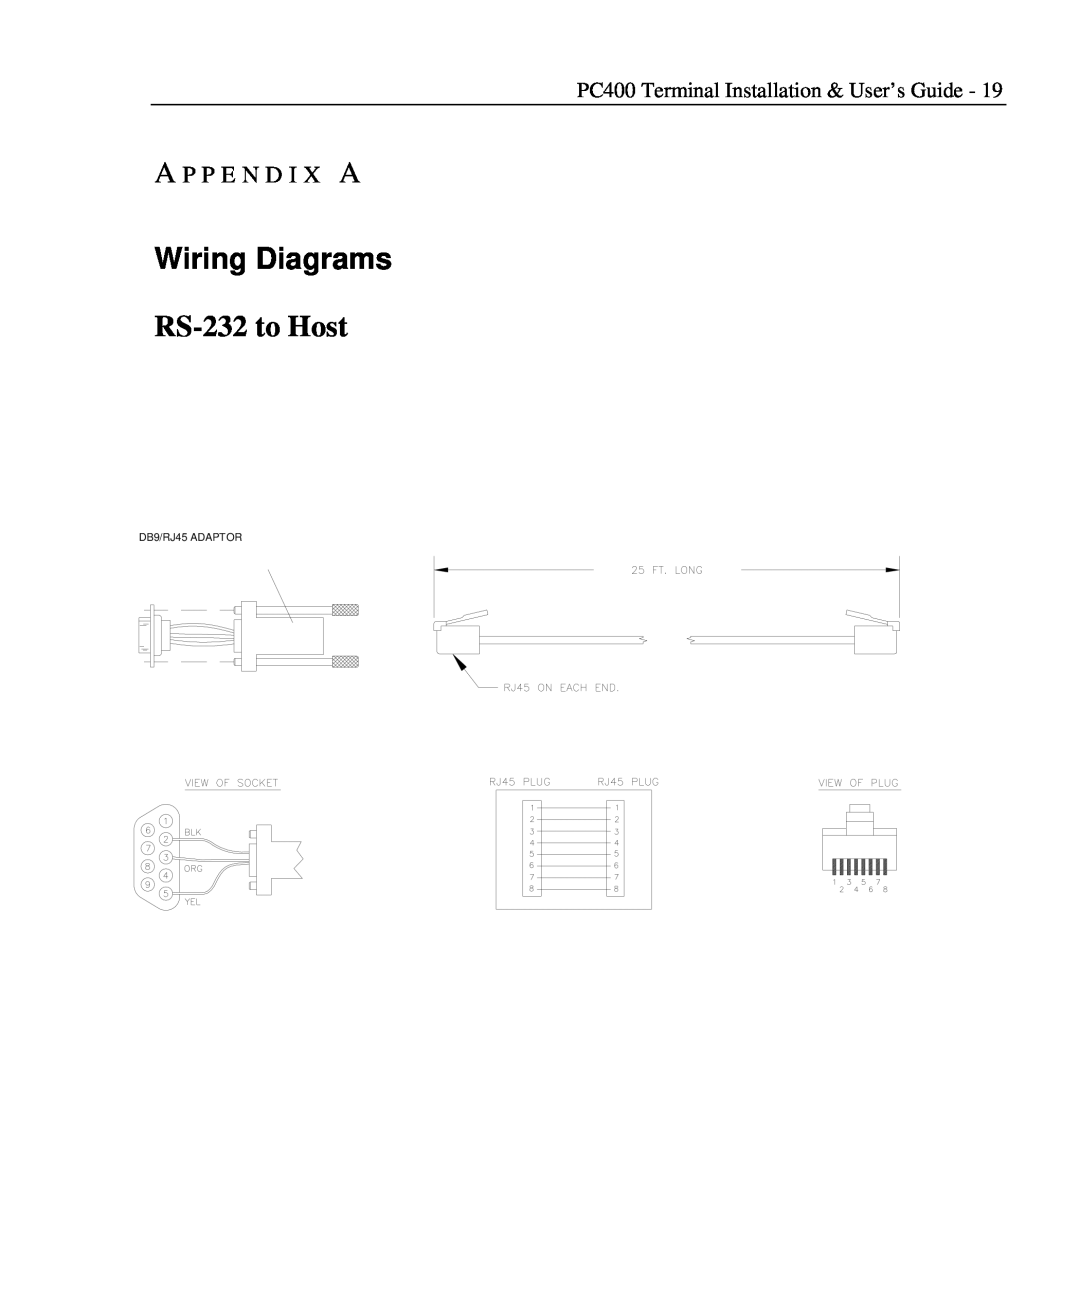 Lathem PC400TX manual Wiring Diagrams, RS-232 to Host, A P P E N D I X A, DB9/RJ45 ADAPTOR 